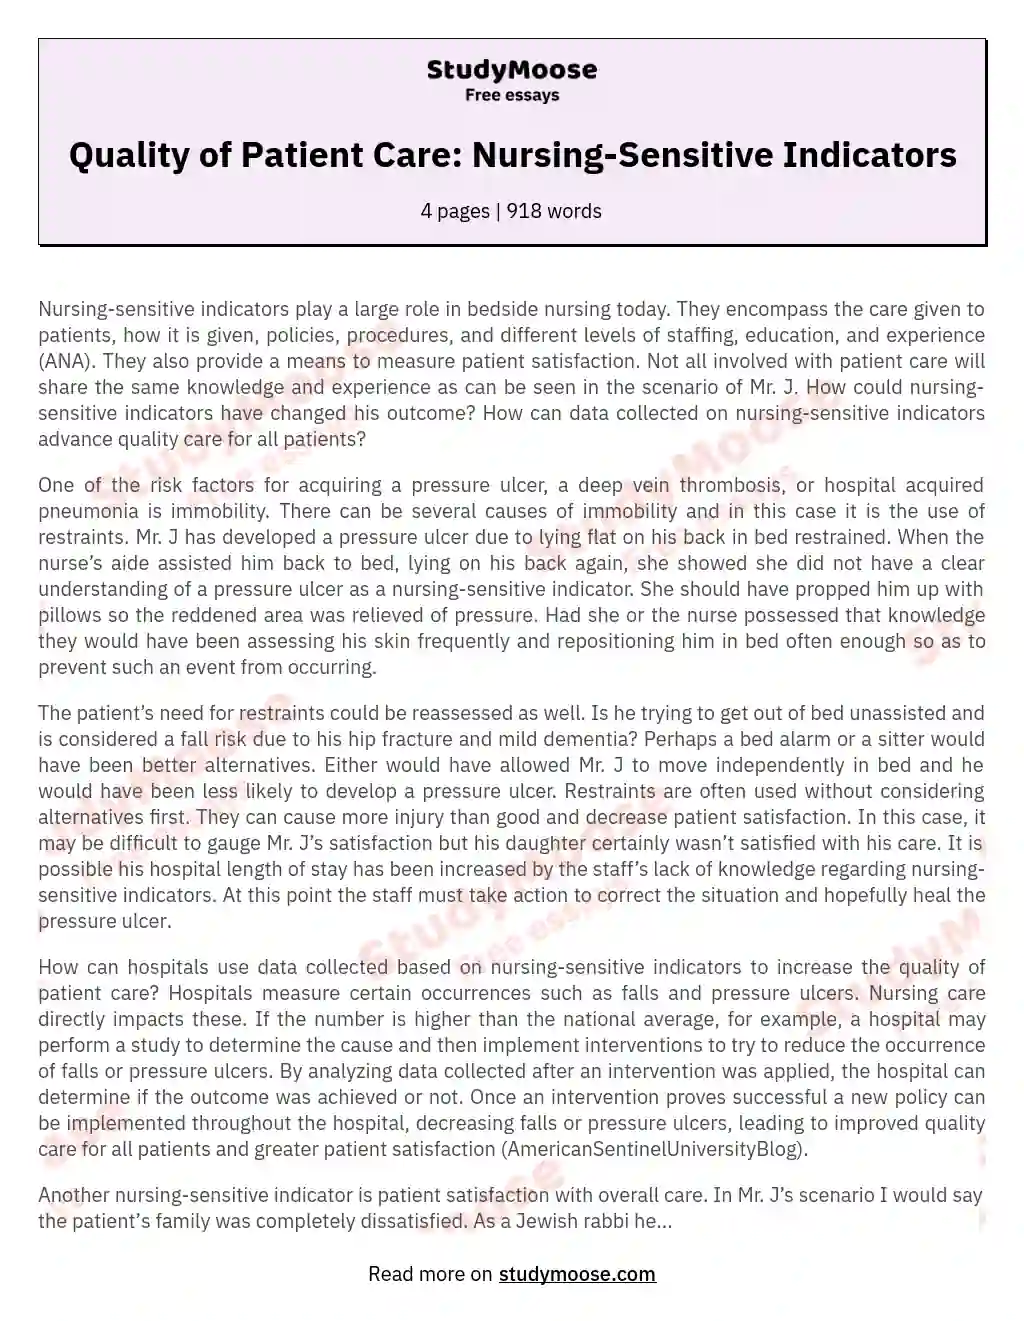 Quality of Patient Care: Nursing-Sensitive Indicators essay